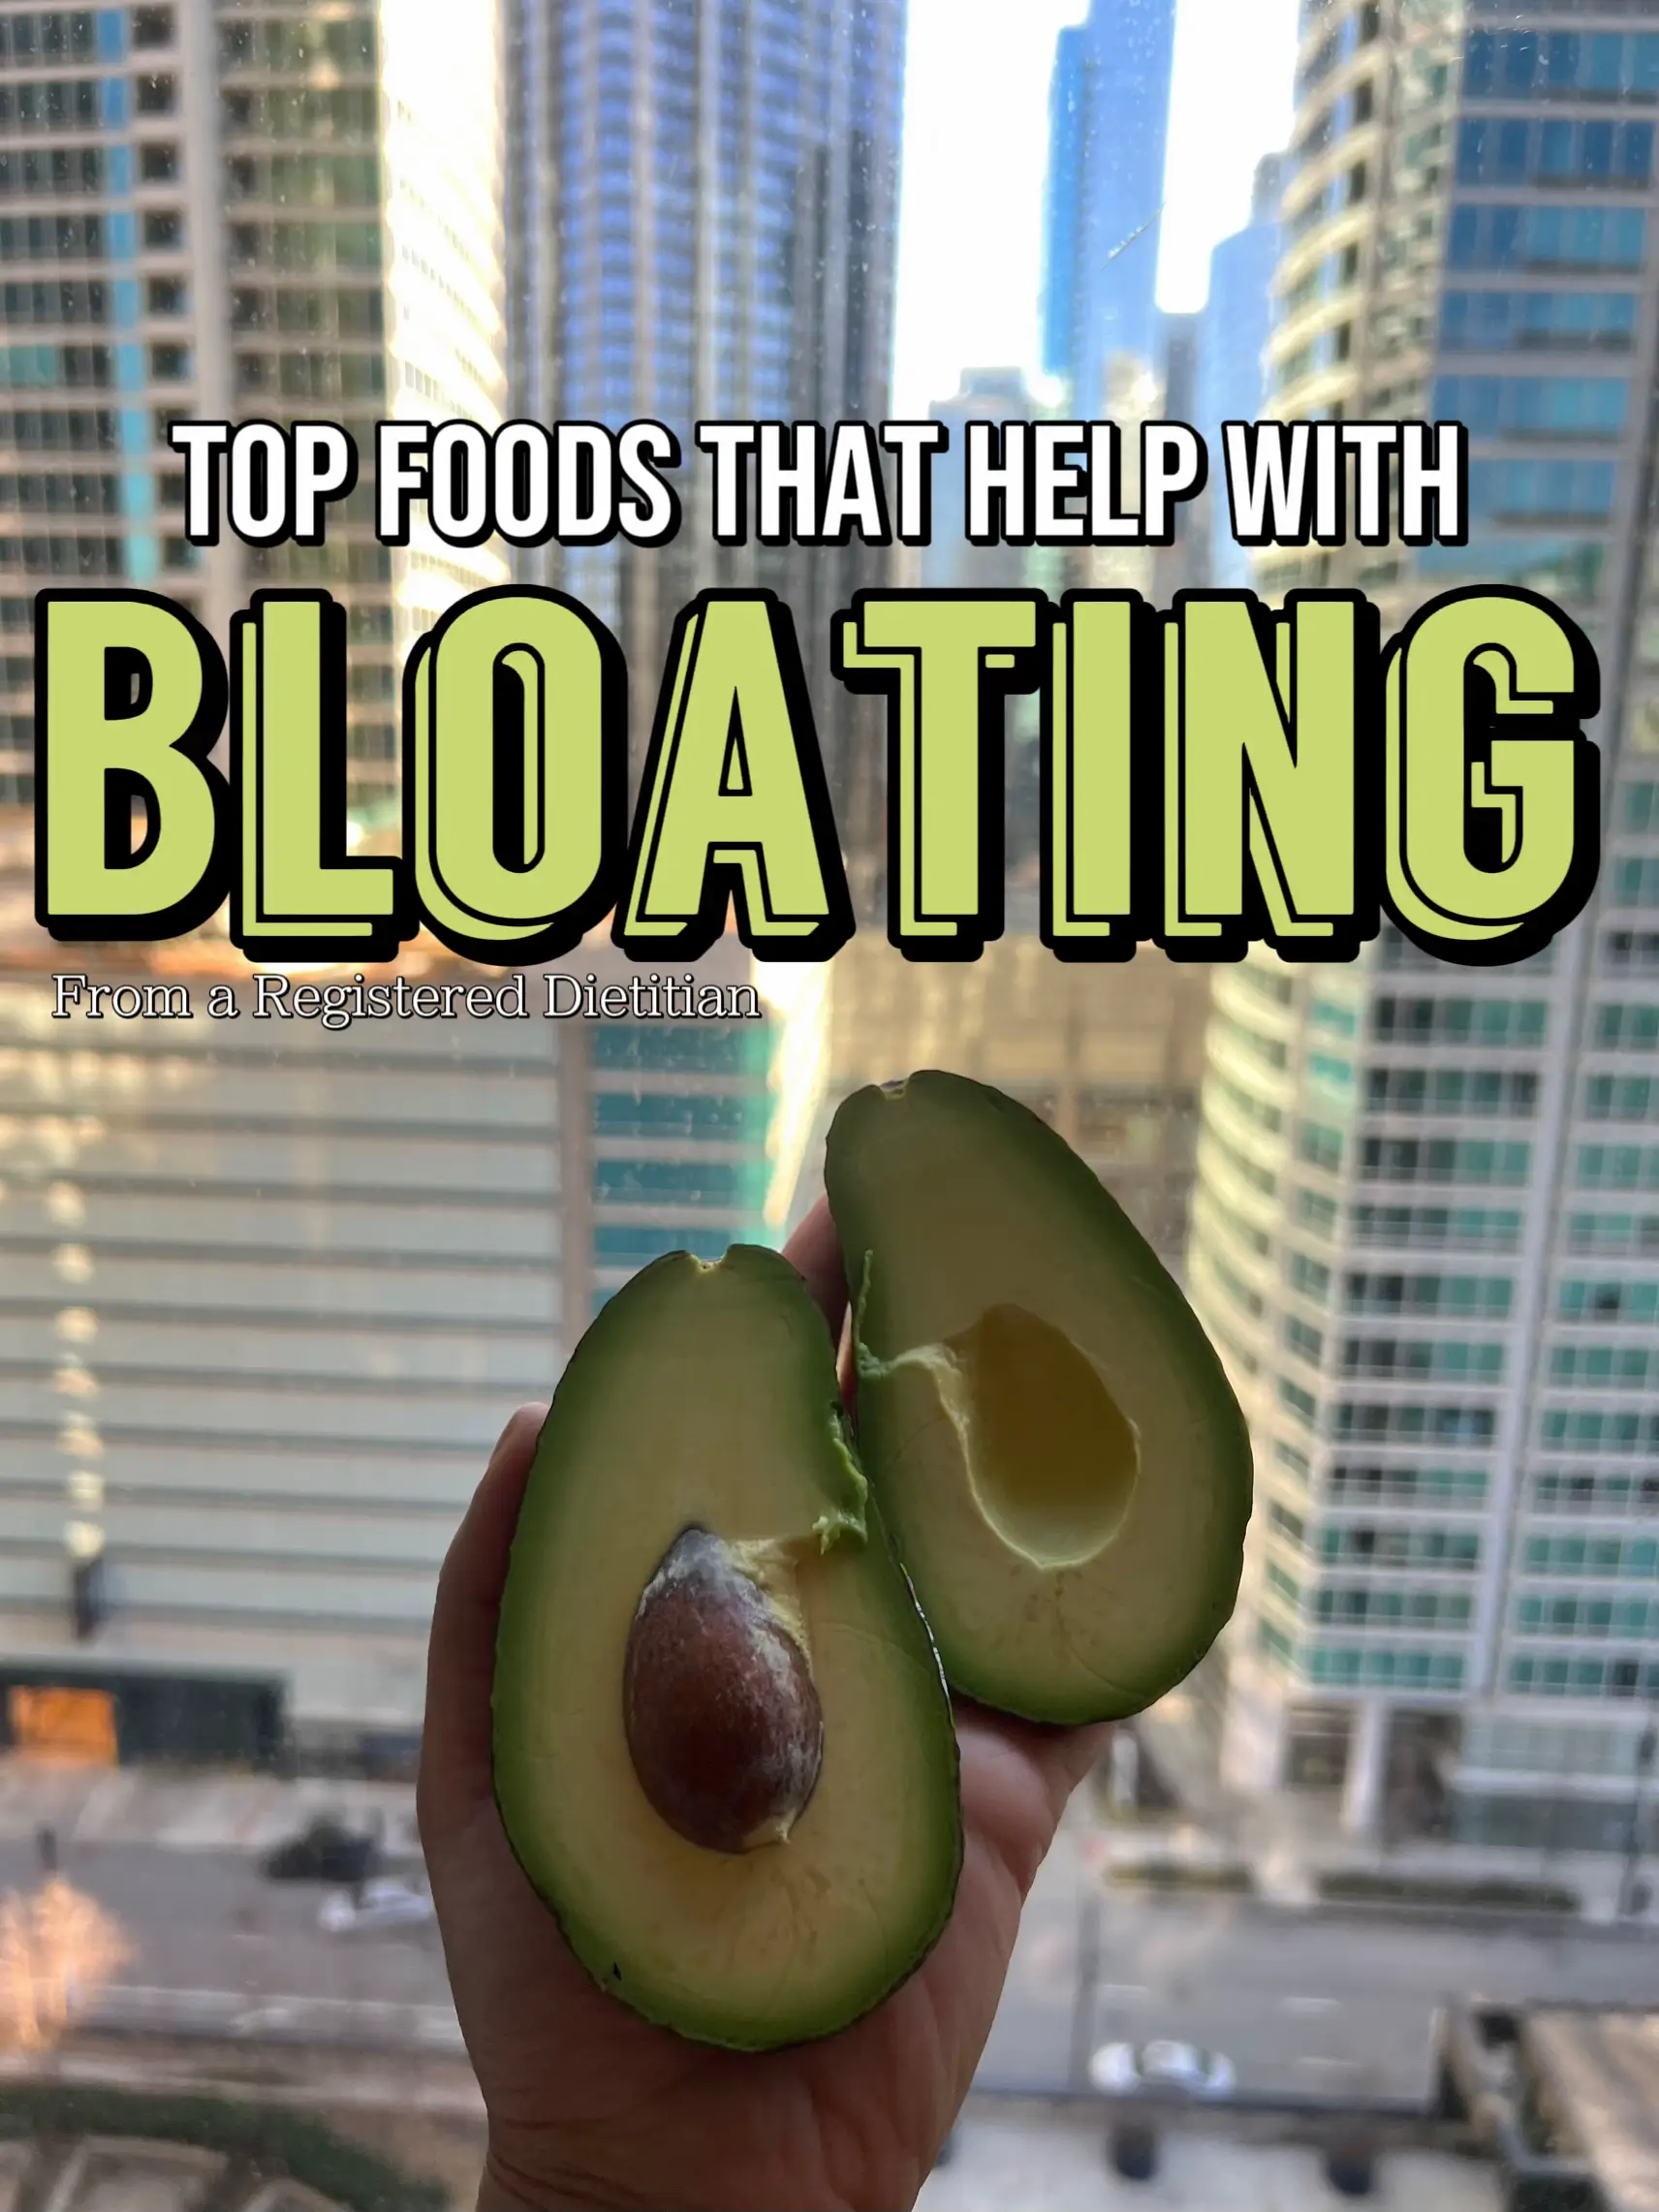 Bloating foods - Lemon8 Search